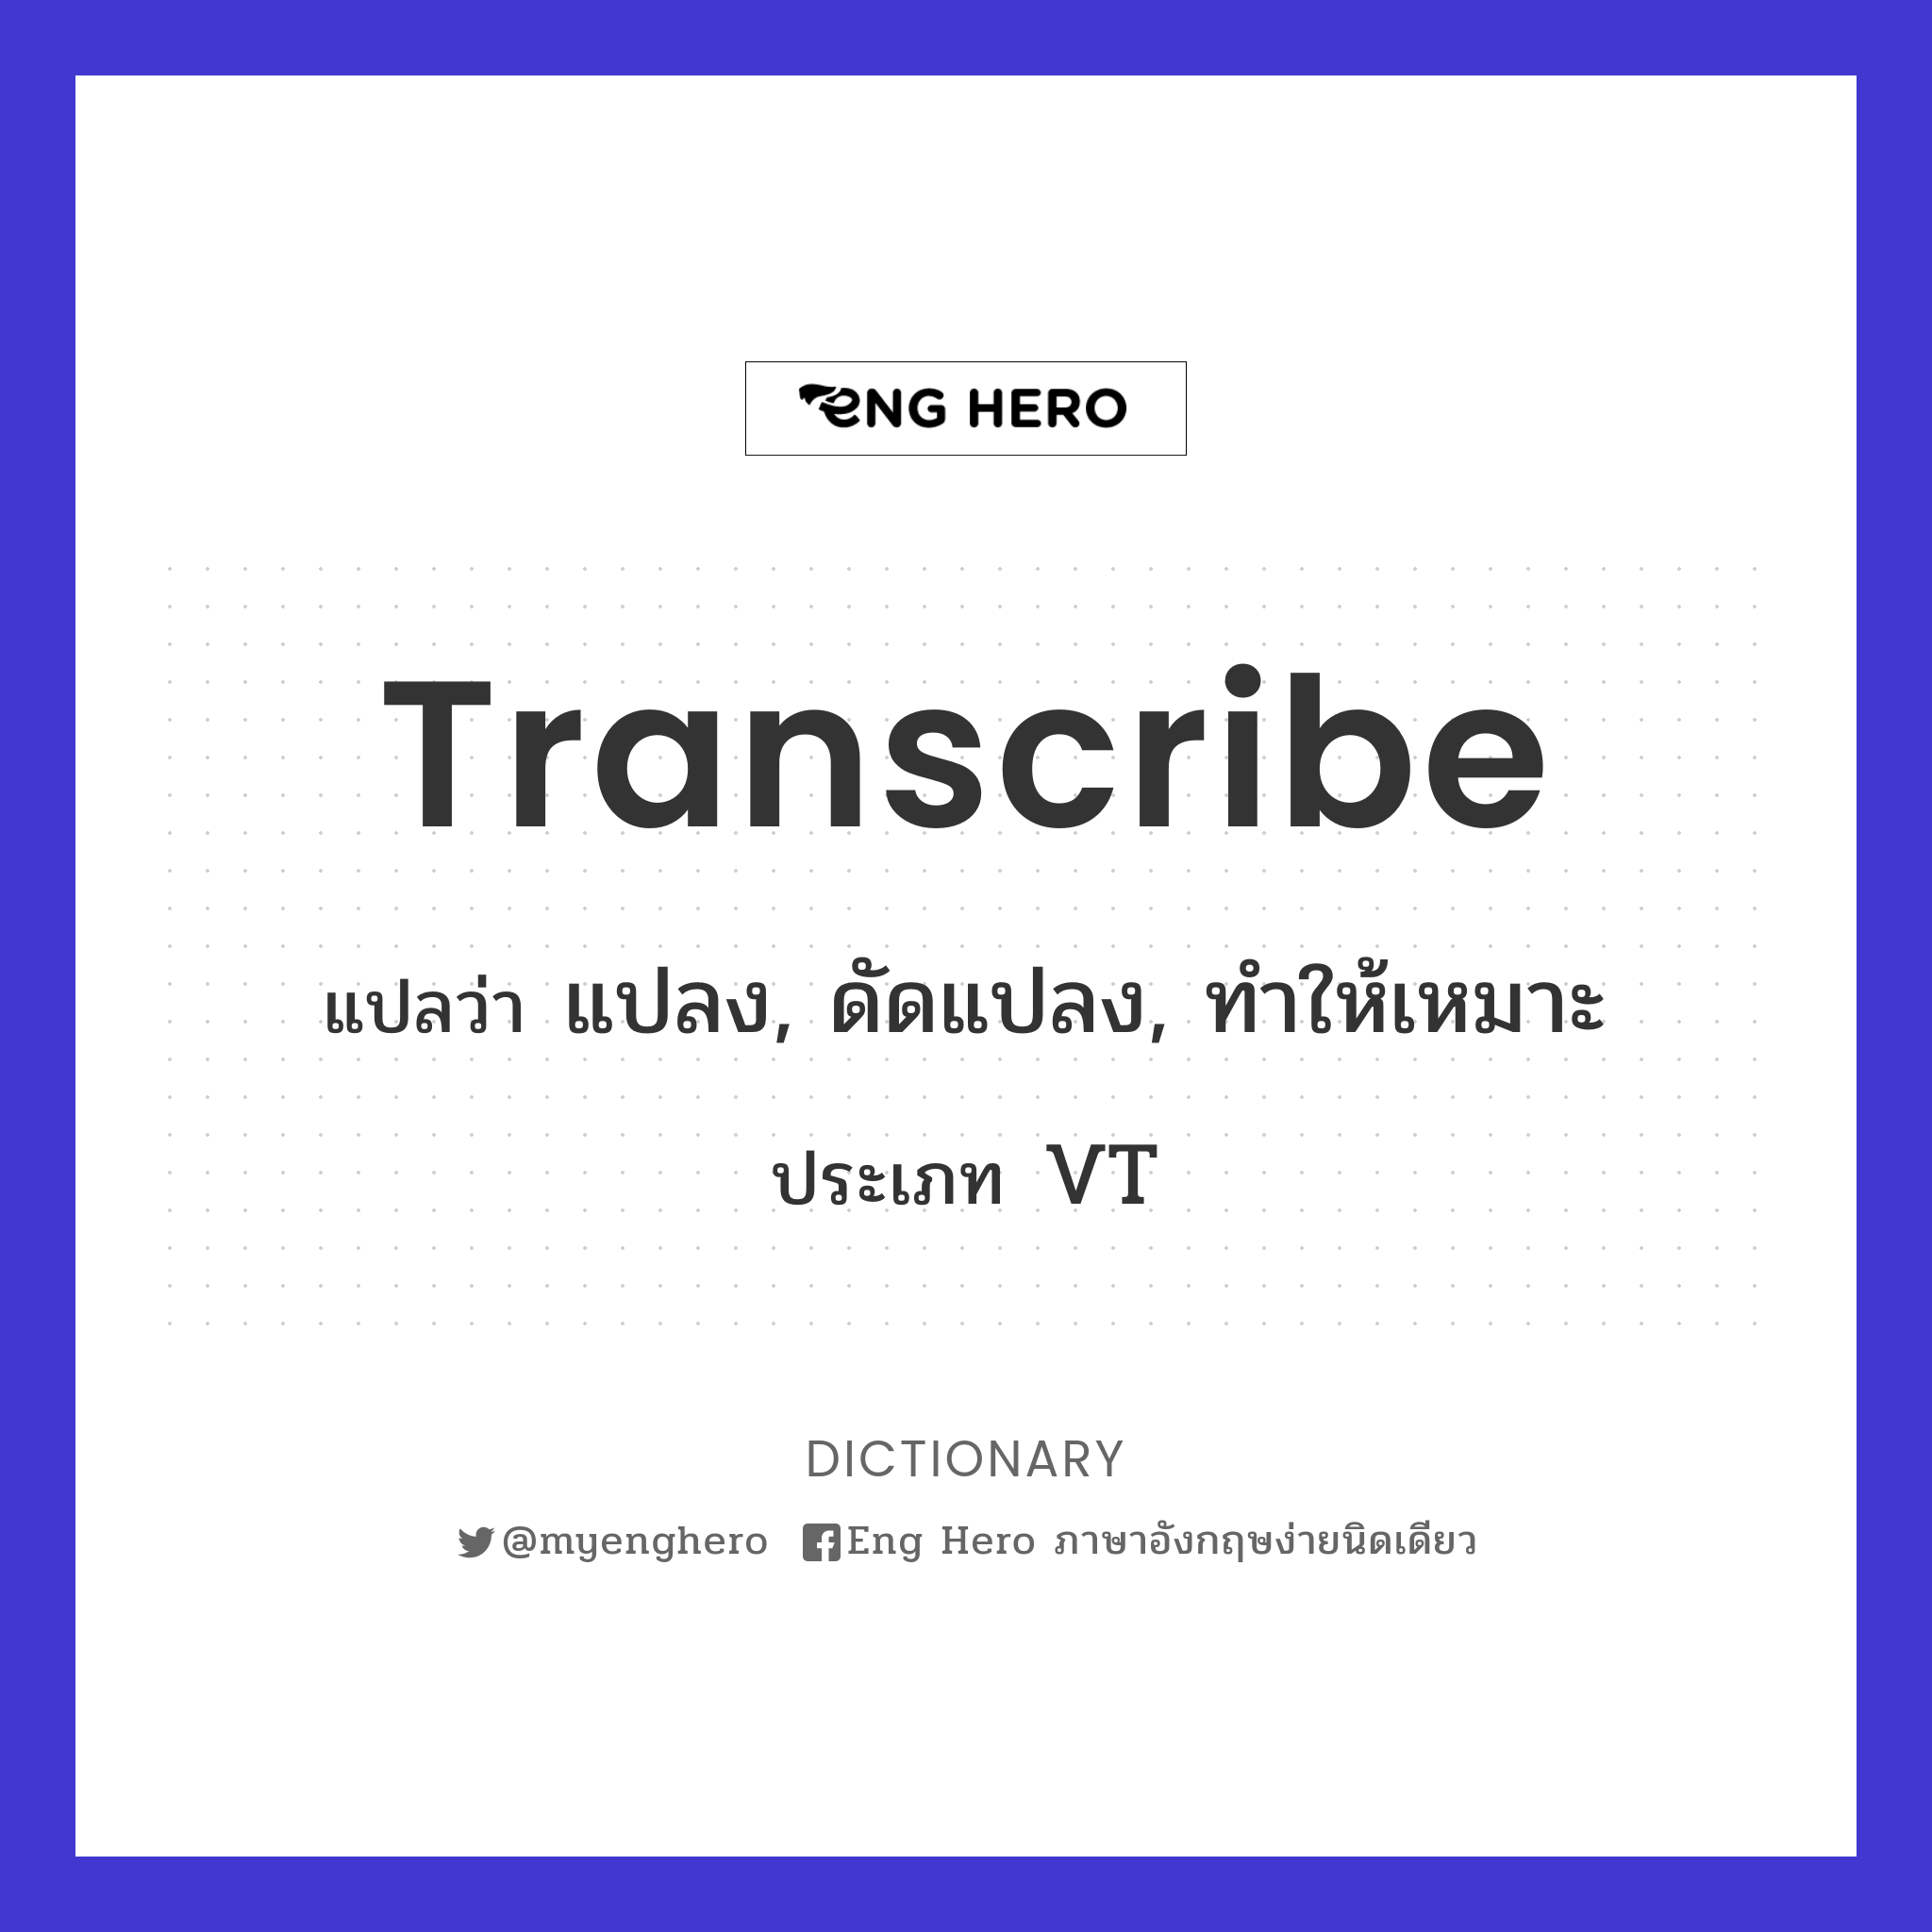 transcribe